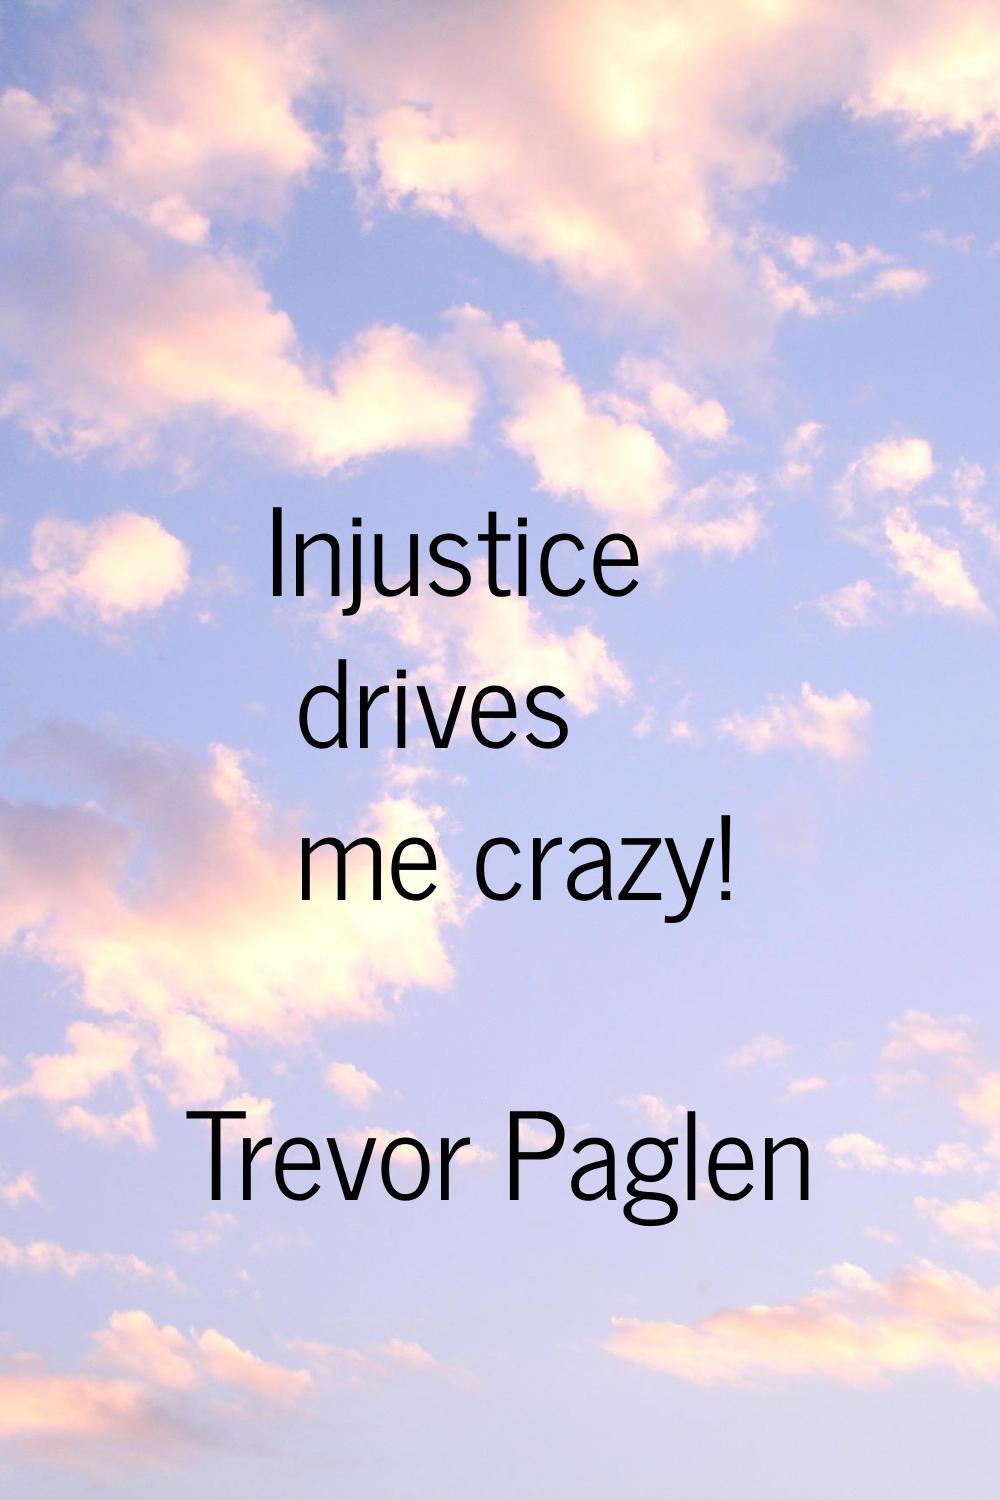 Injustice drives me crazy!